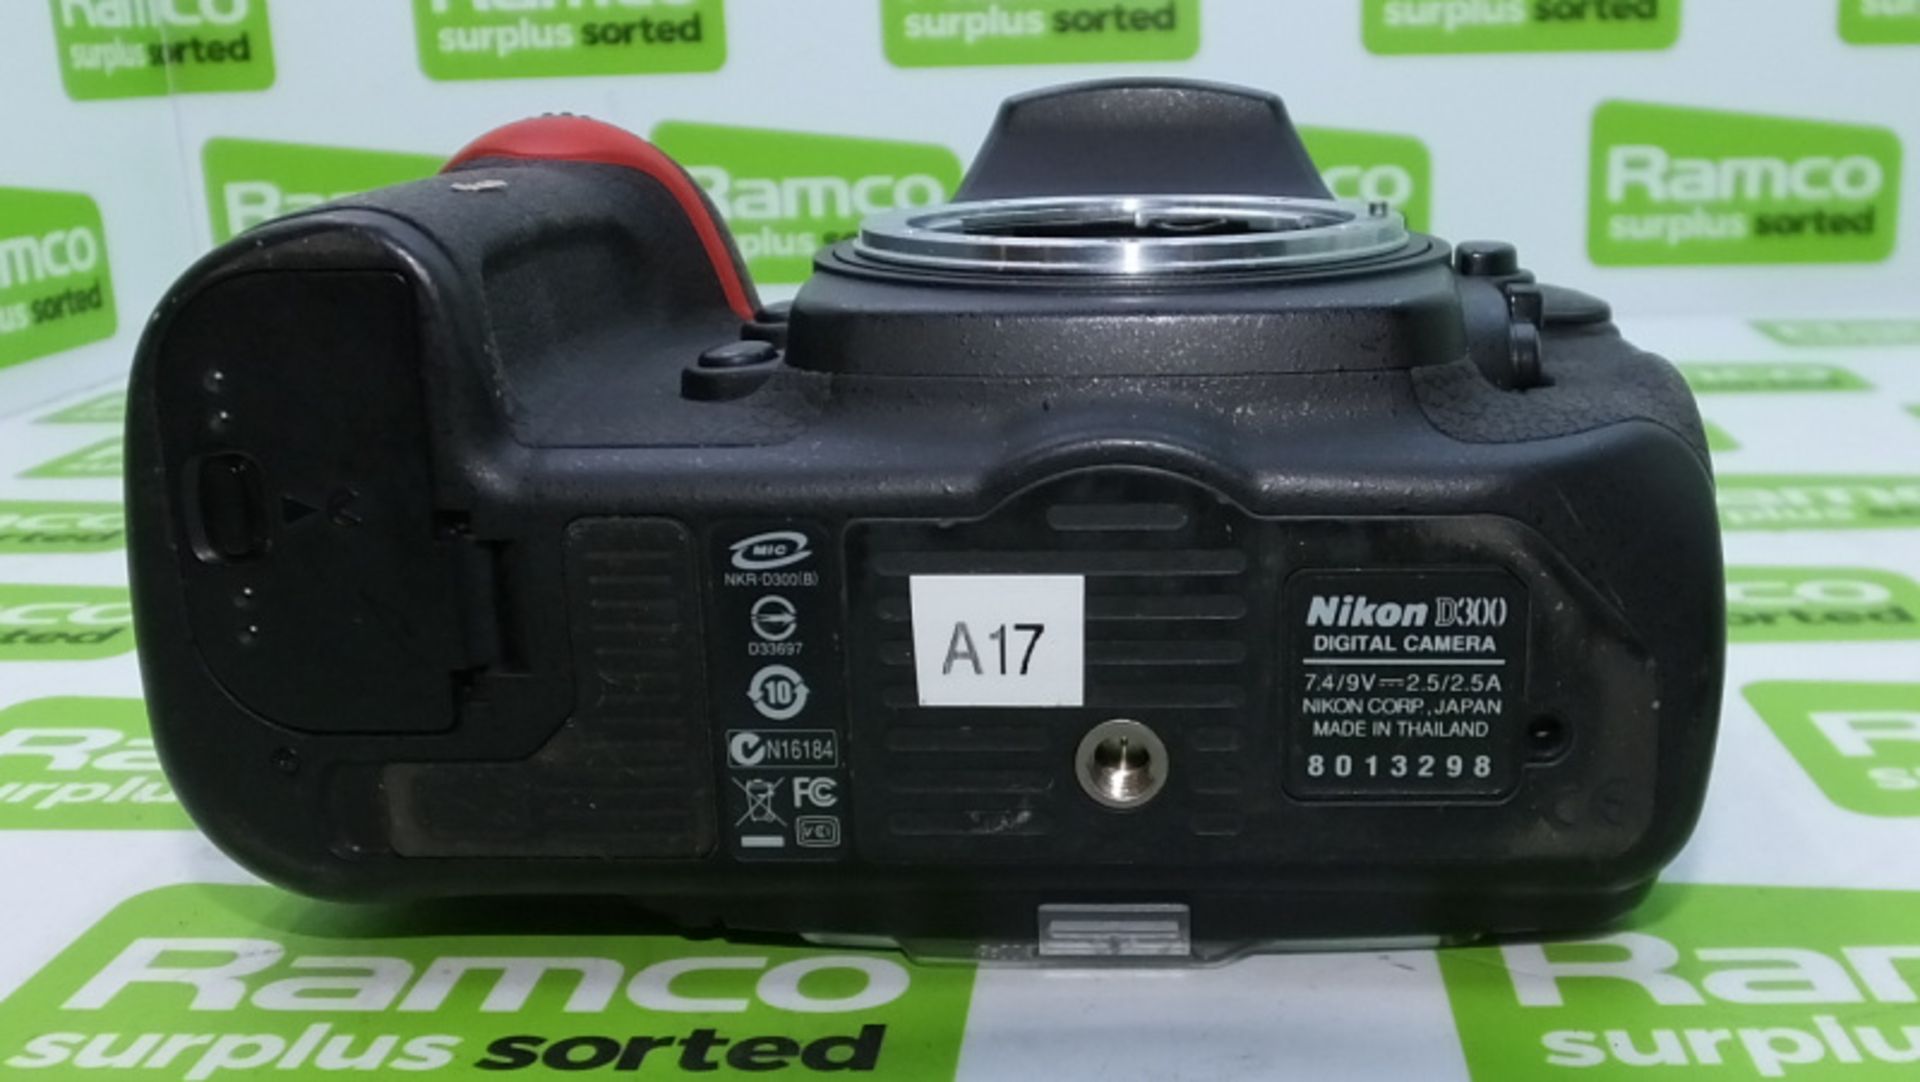 Nikon D300 SLR Digital Camera Body - Image 3 of 3